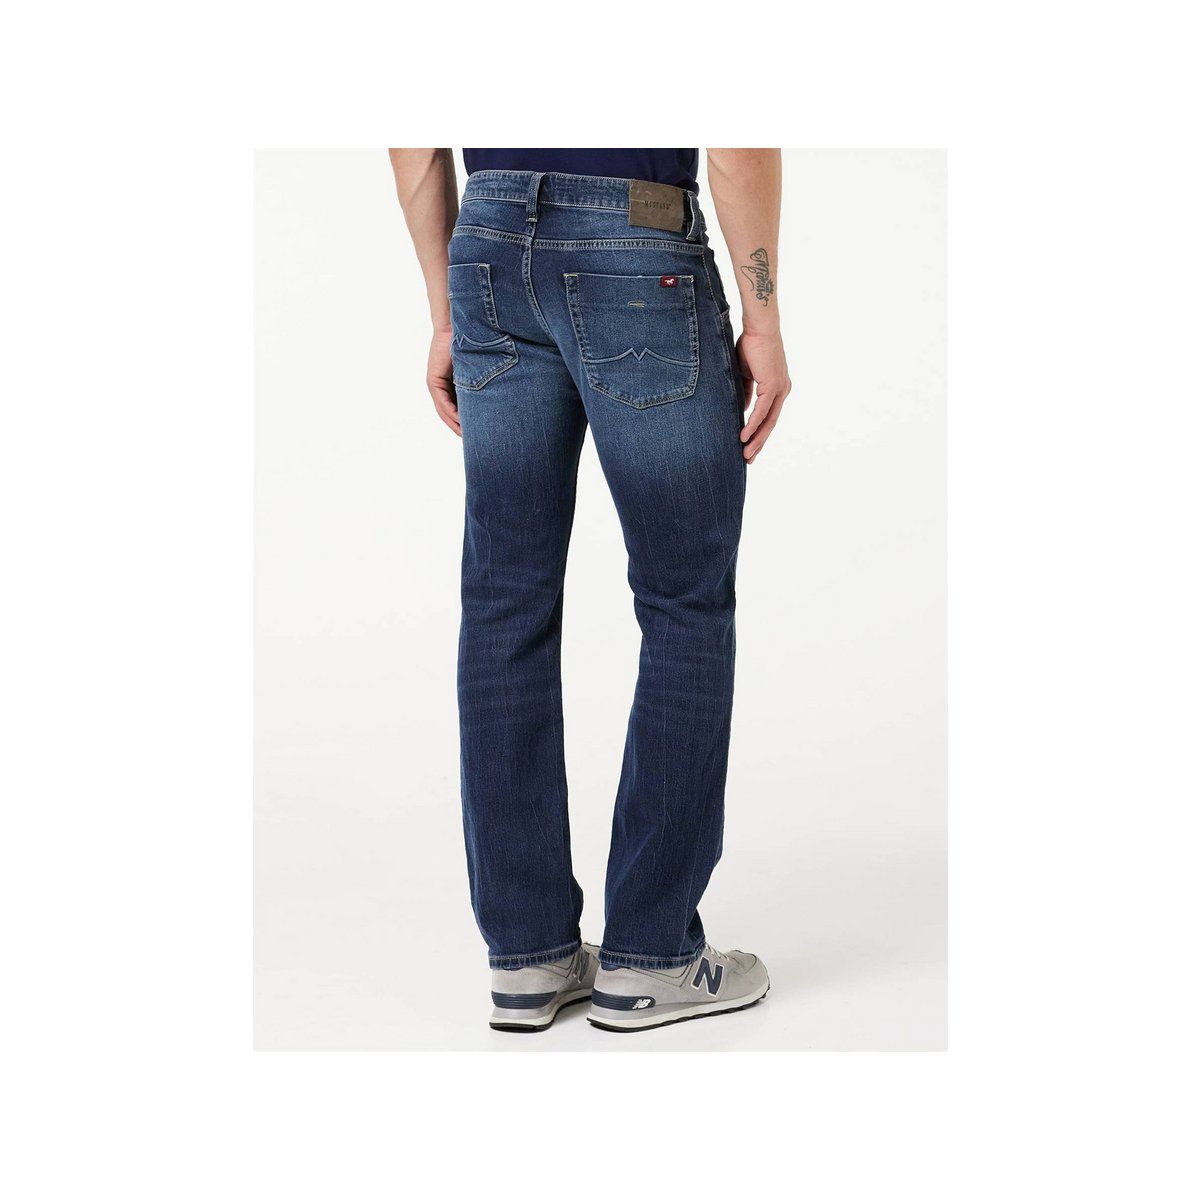 (1-tlg) MUSTANG 5-Pocket-Jeans blau